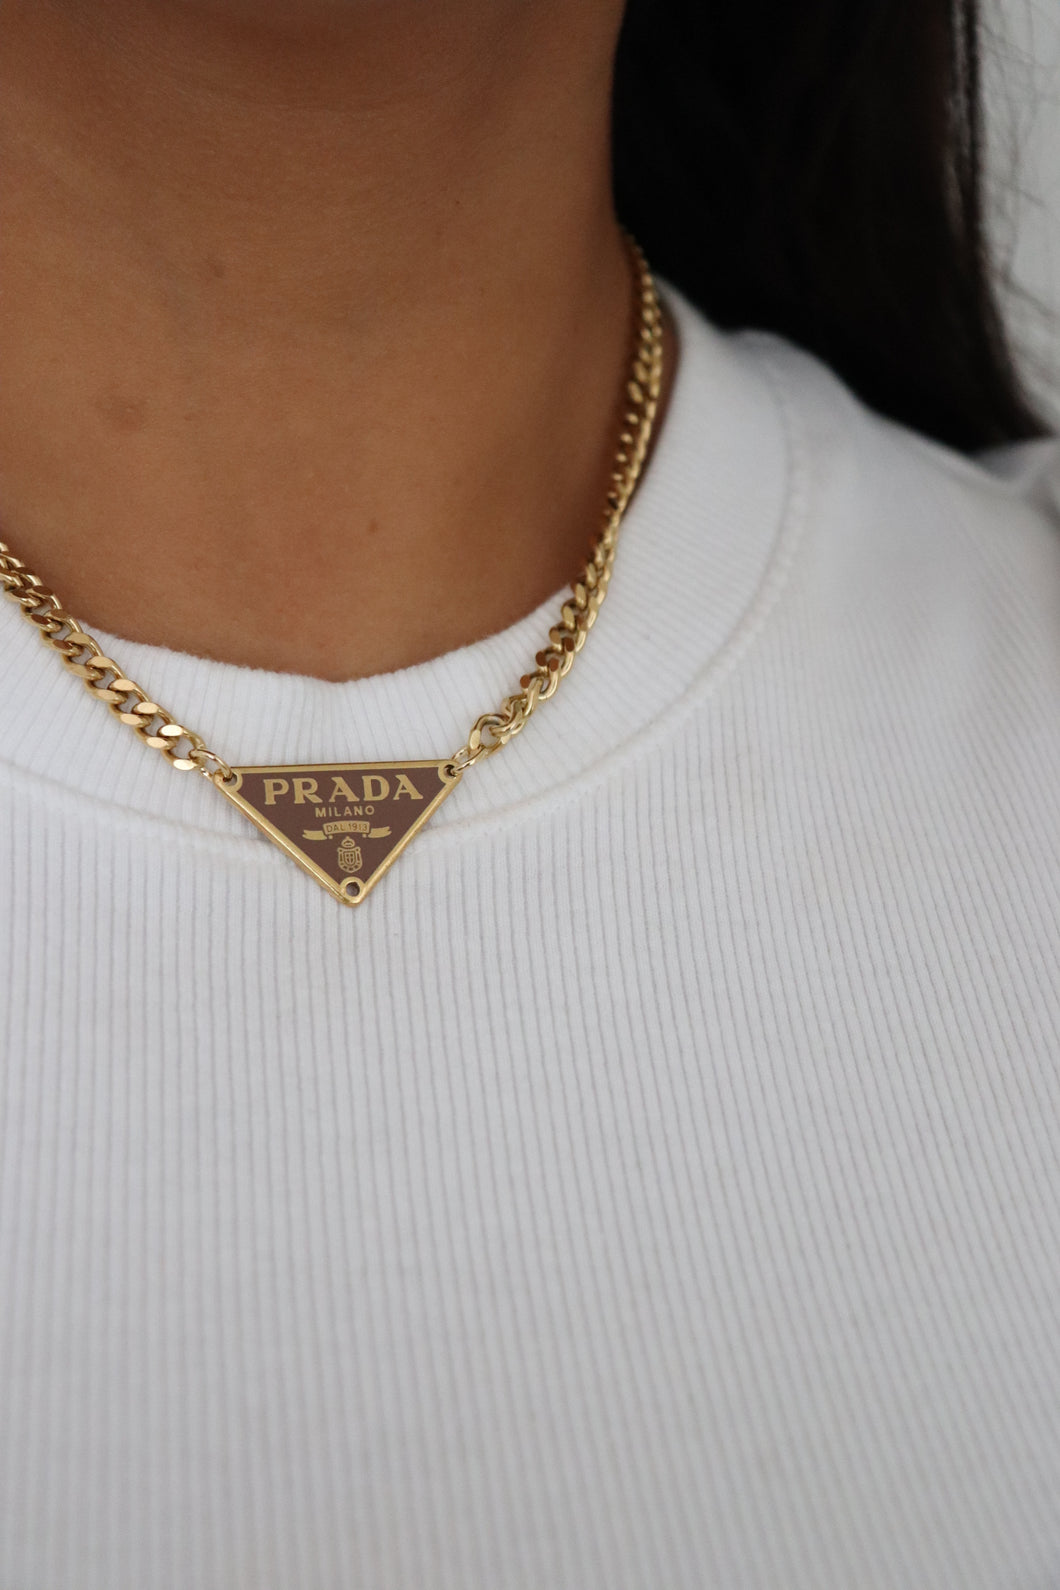 Prada brown necklace - cuban chain